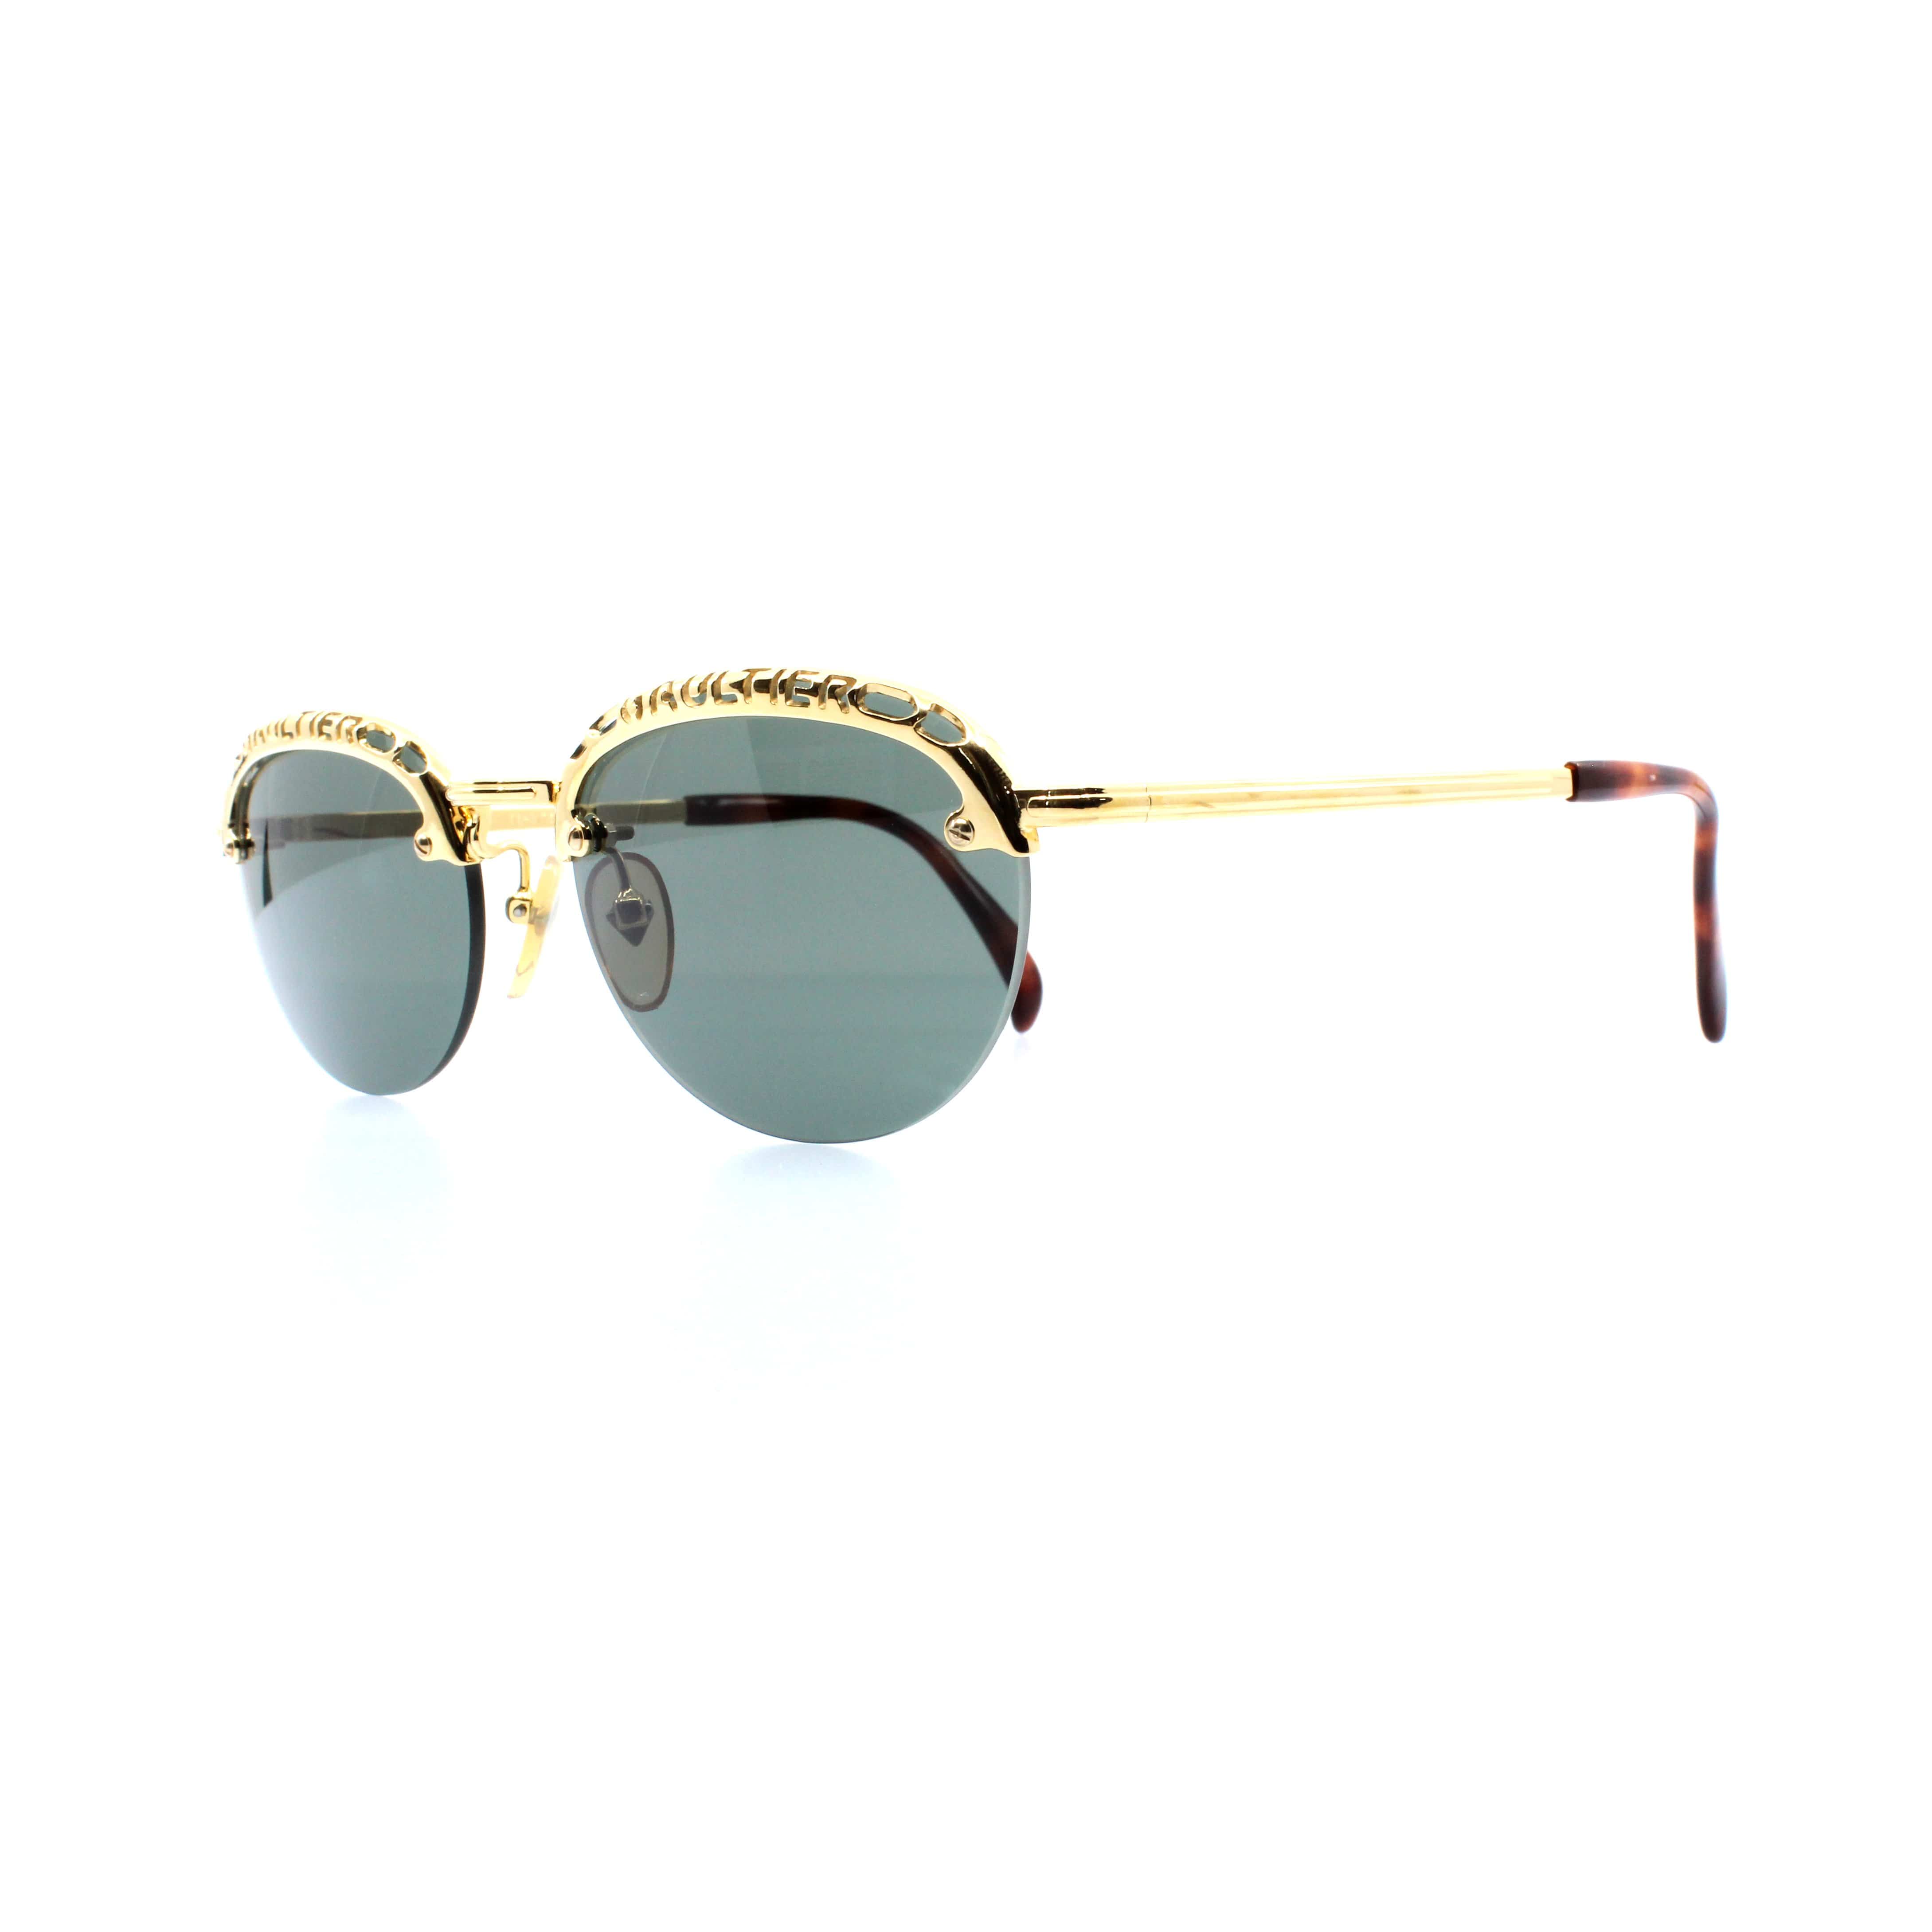 Gold Vintage Jean Paul Gaultier 56-3175 Sunglasses